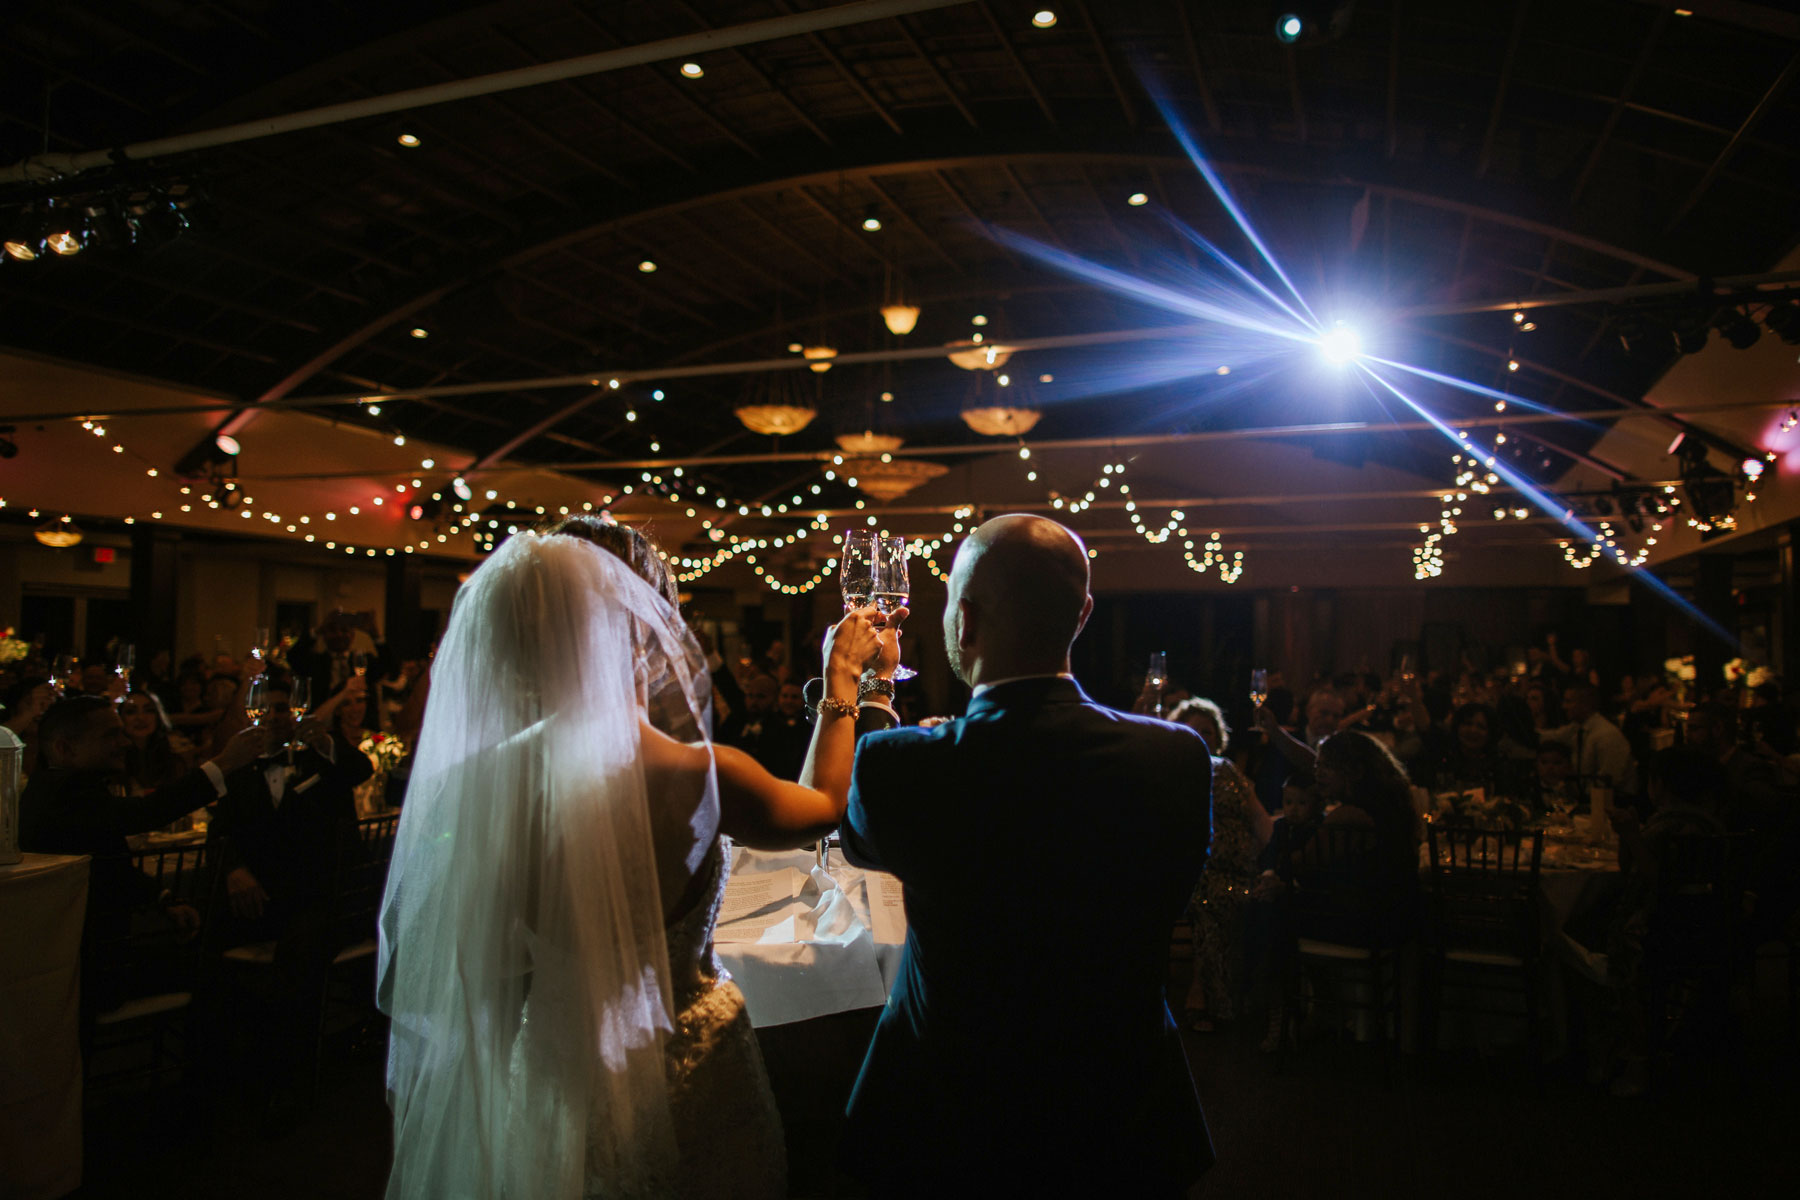 Expert Lighting Tips for Wedding Reception by Toronto Top 10 Wedding Photographer